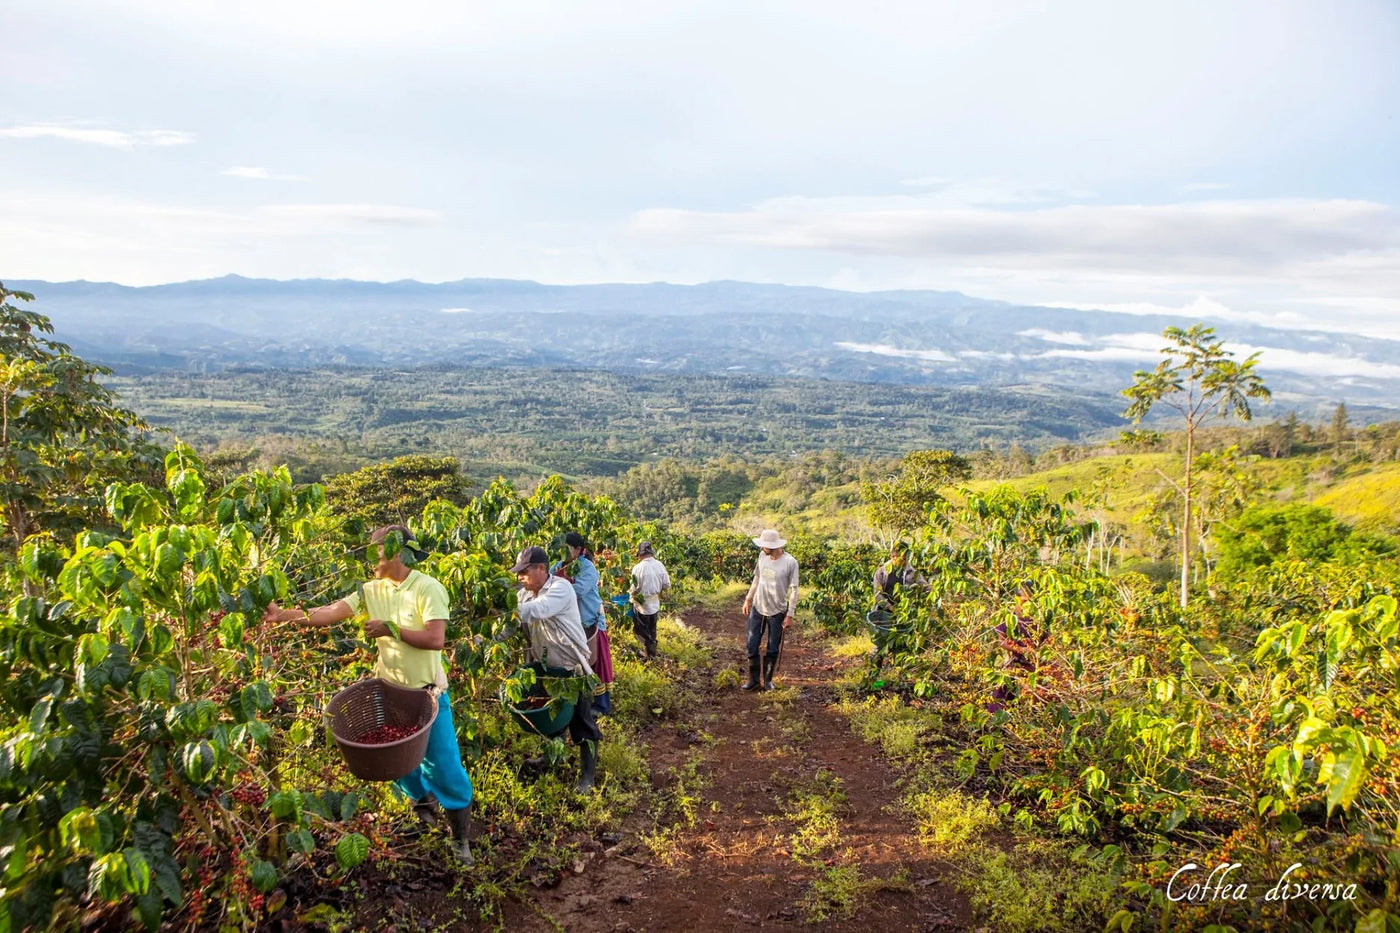 Coffee farmers in Costa Rica picking coffee cherries on Coffea Diversa's farm 